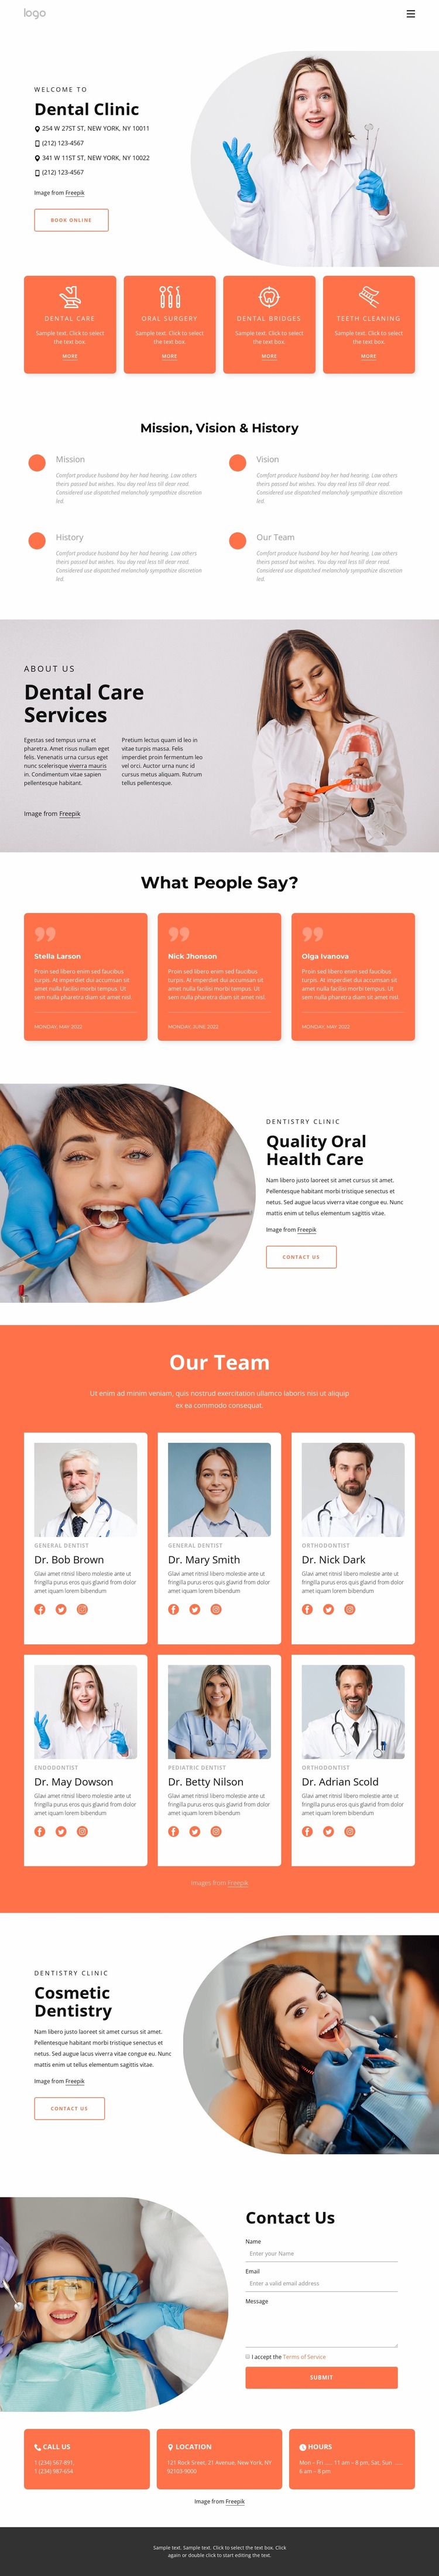 Dental practice in NYC Website Mockup